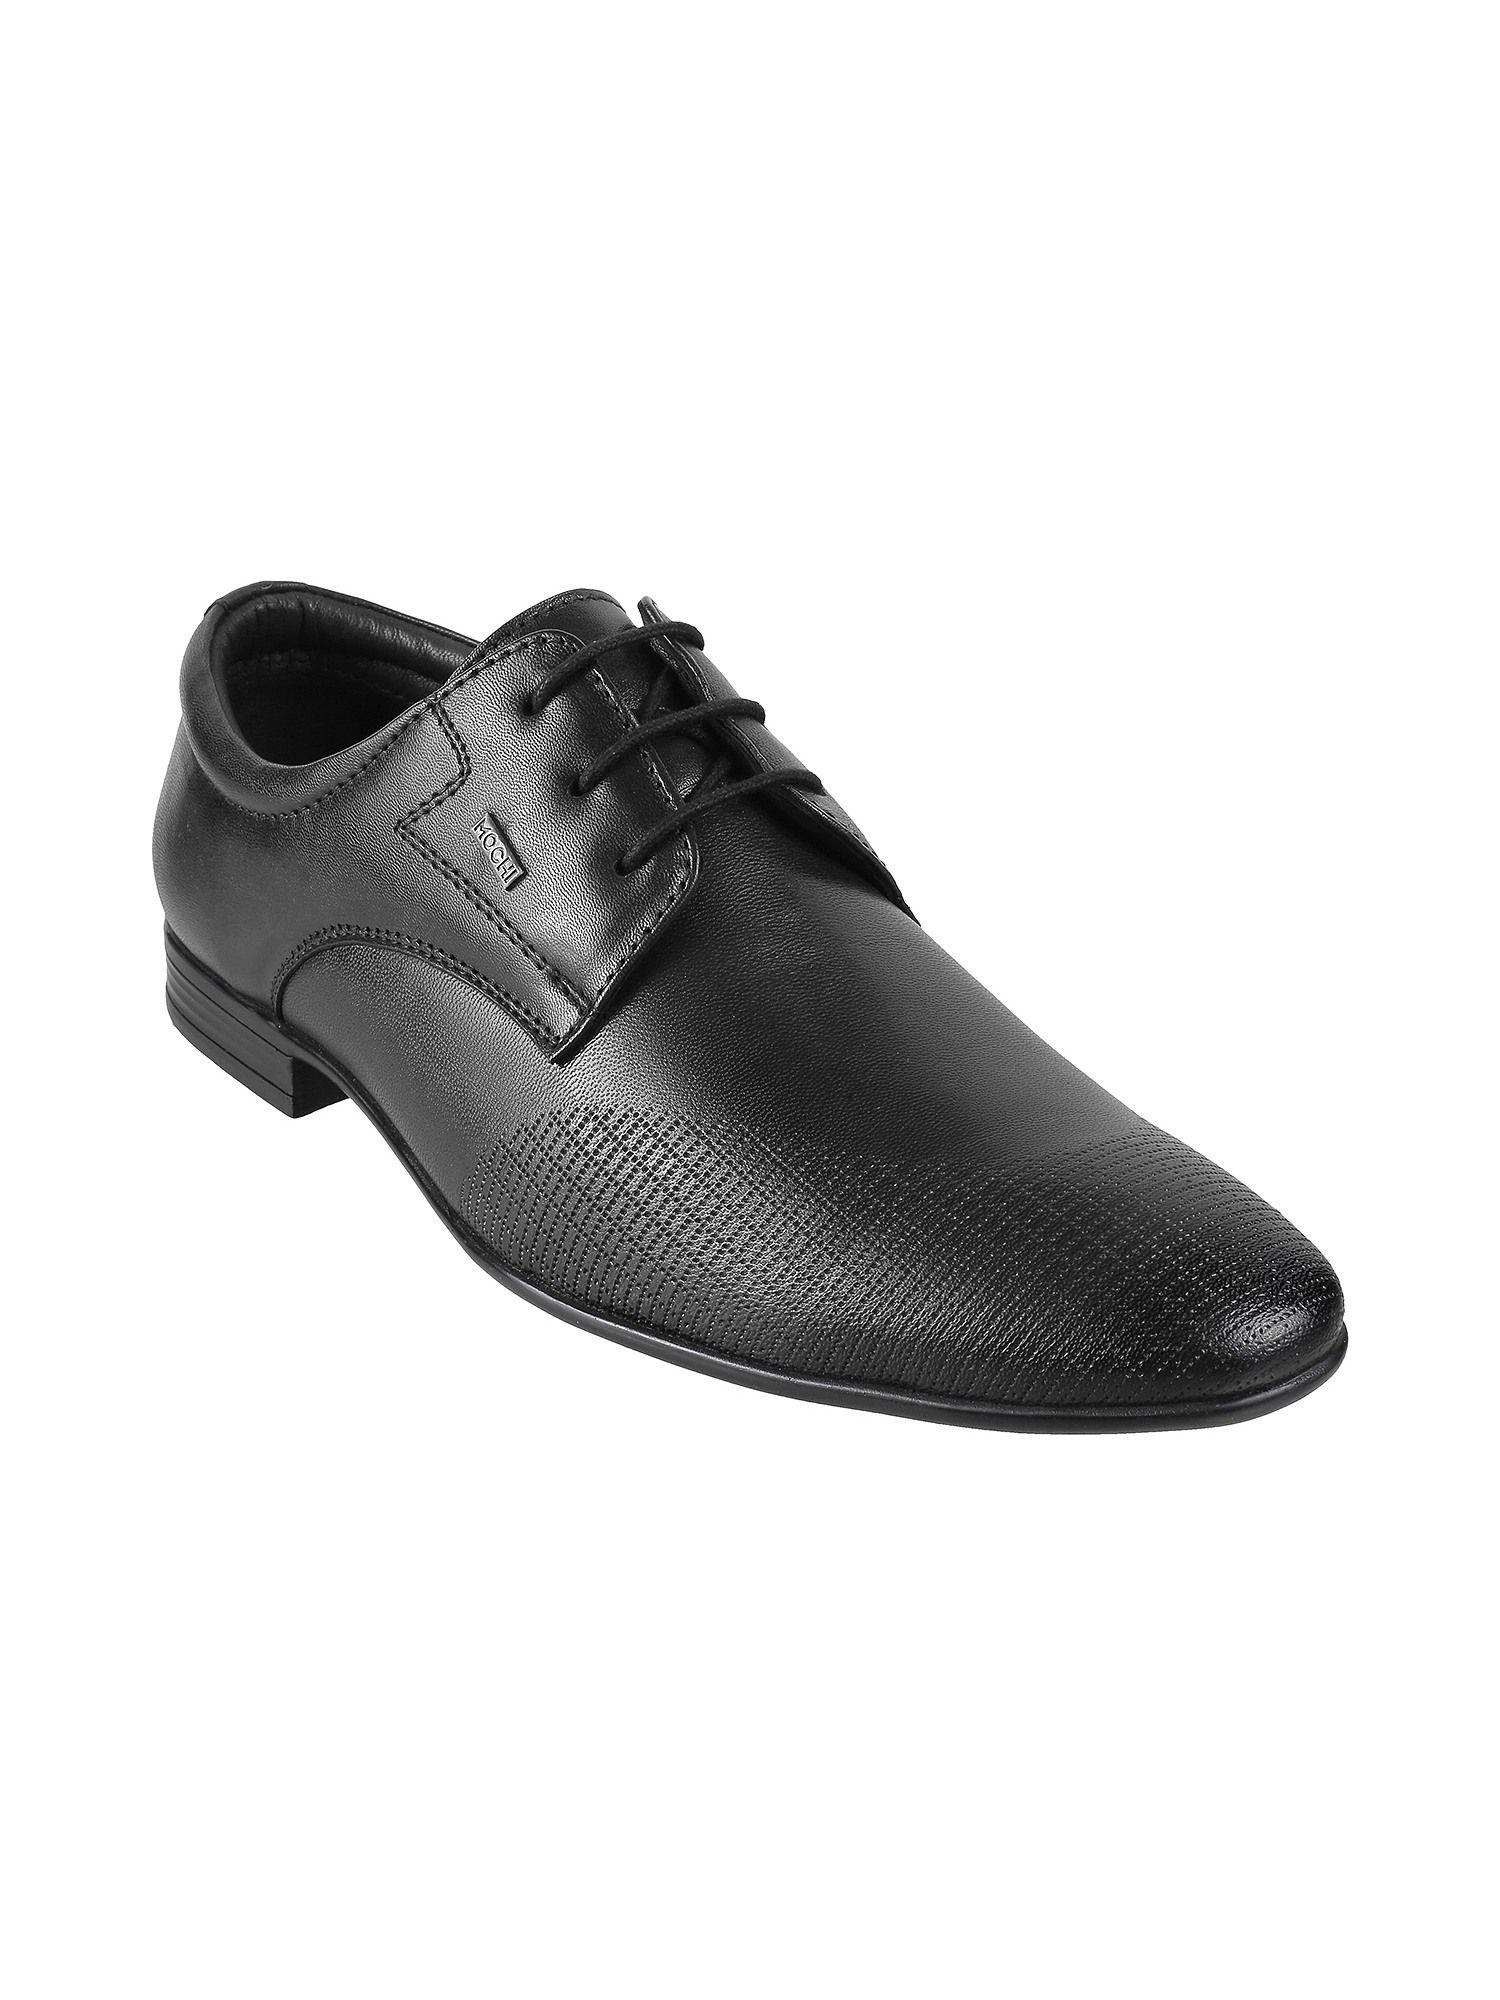 mens-black-formal-lace-ups-shoesmochi-textured-black-formal-shoes